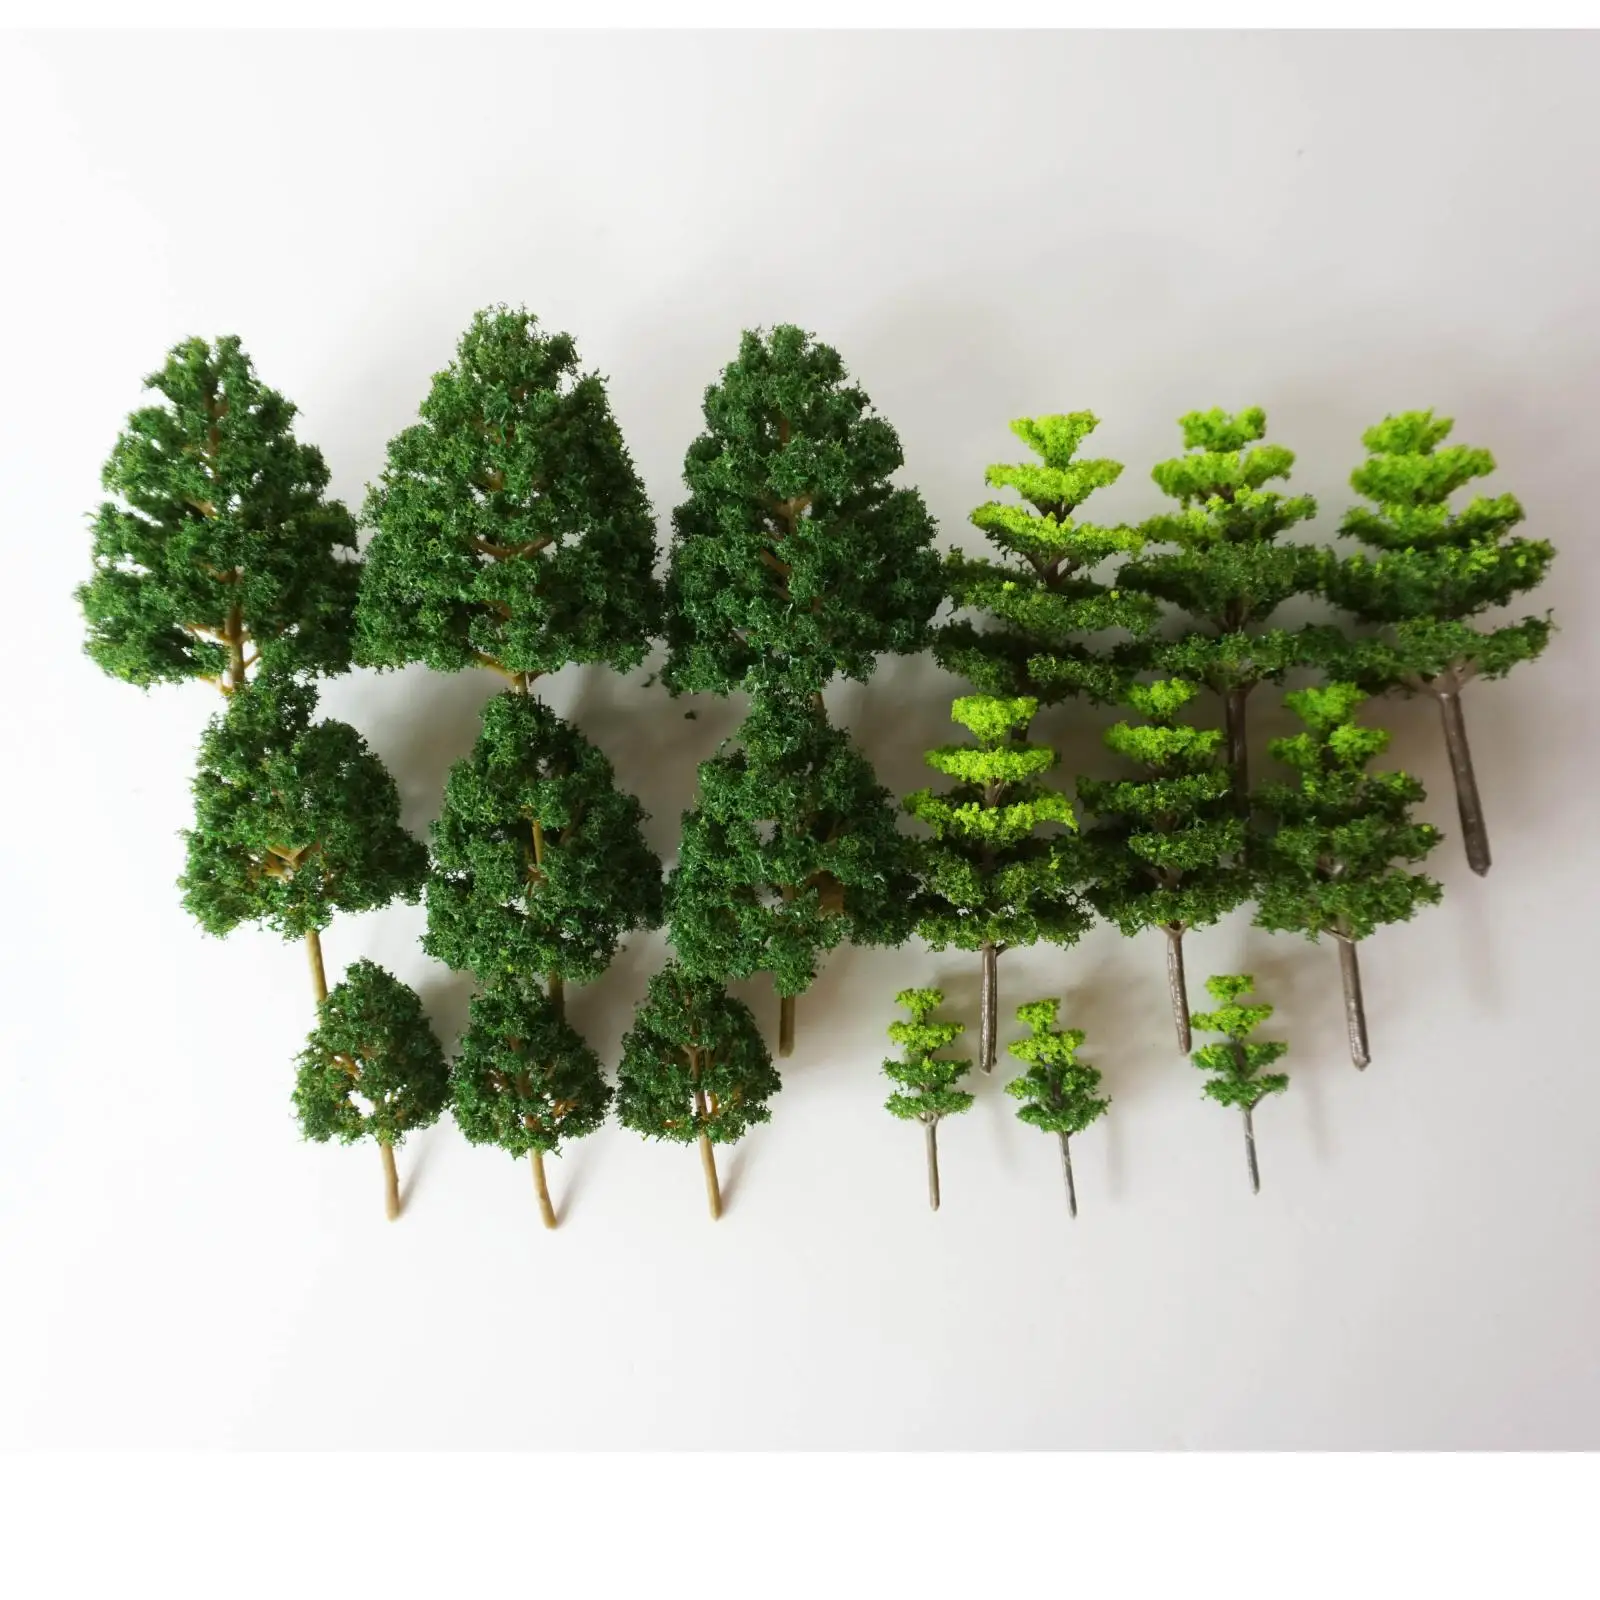 18pcs Model Trees Artificial Tree Train Railroad Scenery Architecture Tree 1:100 Scenery Landscape Models